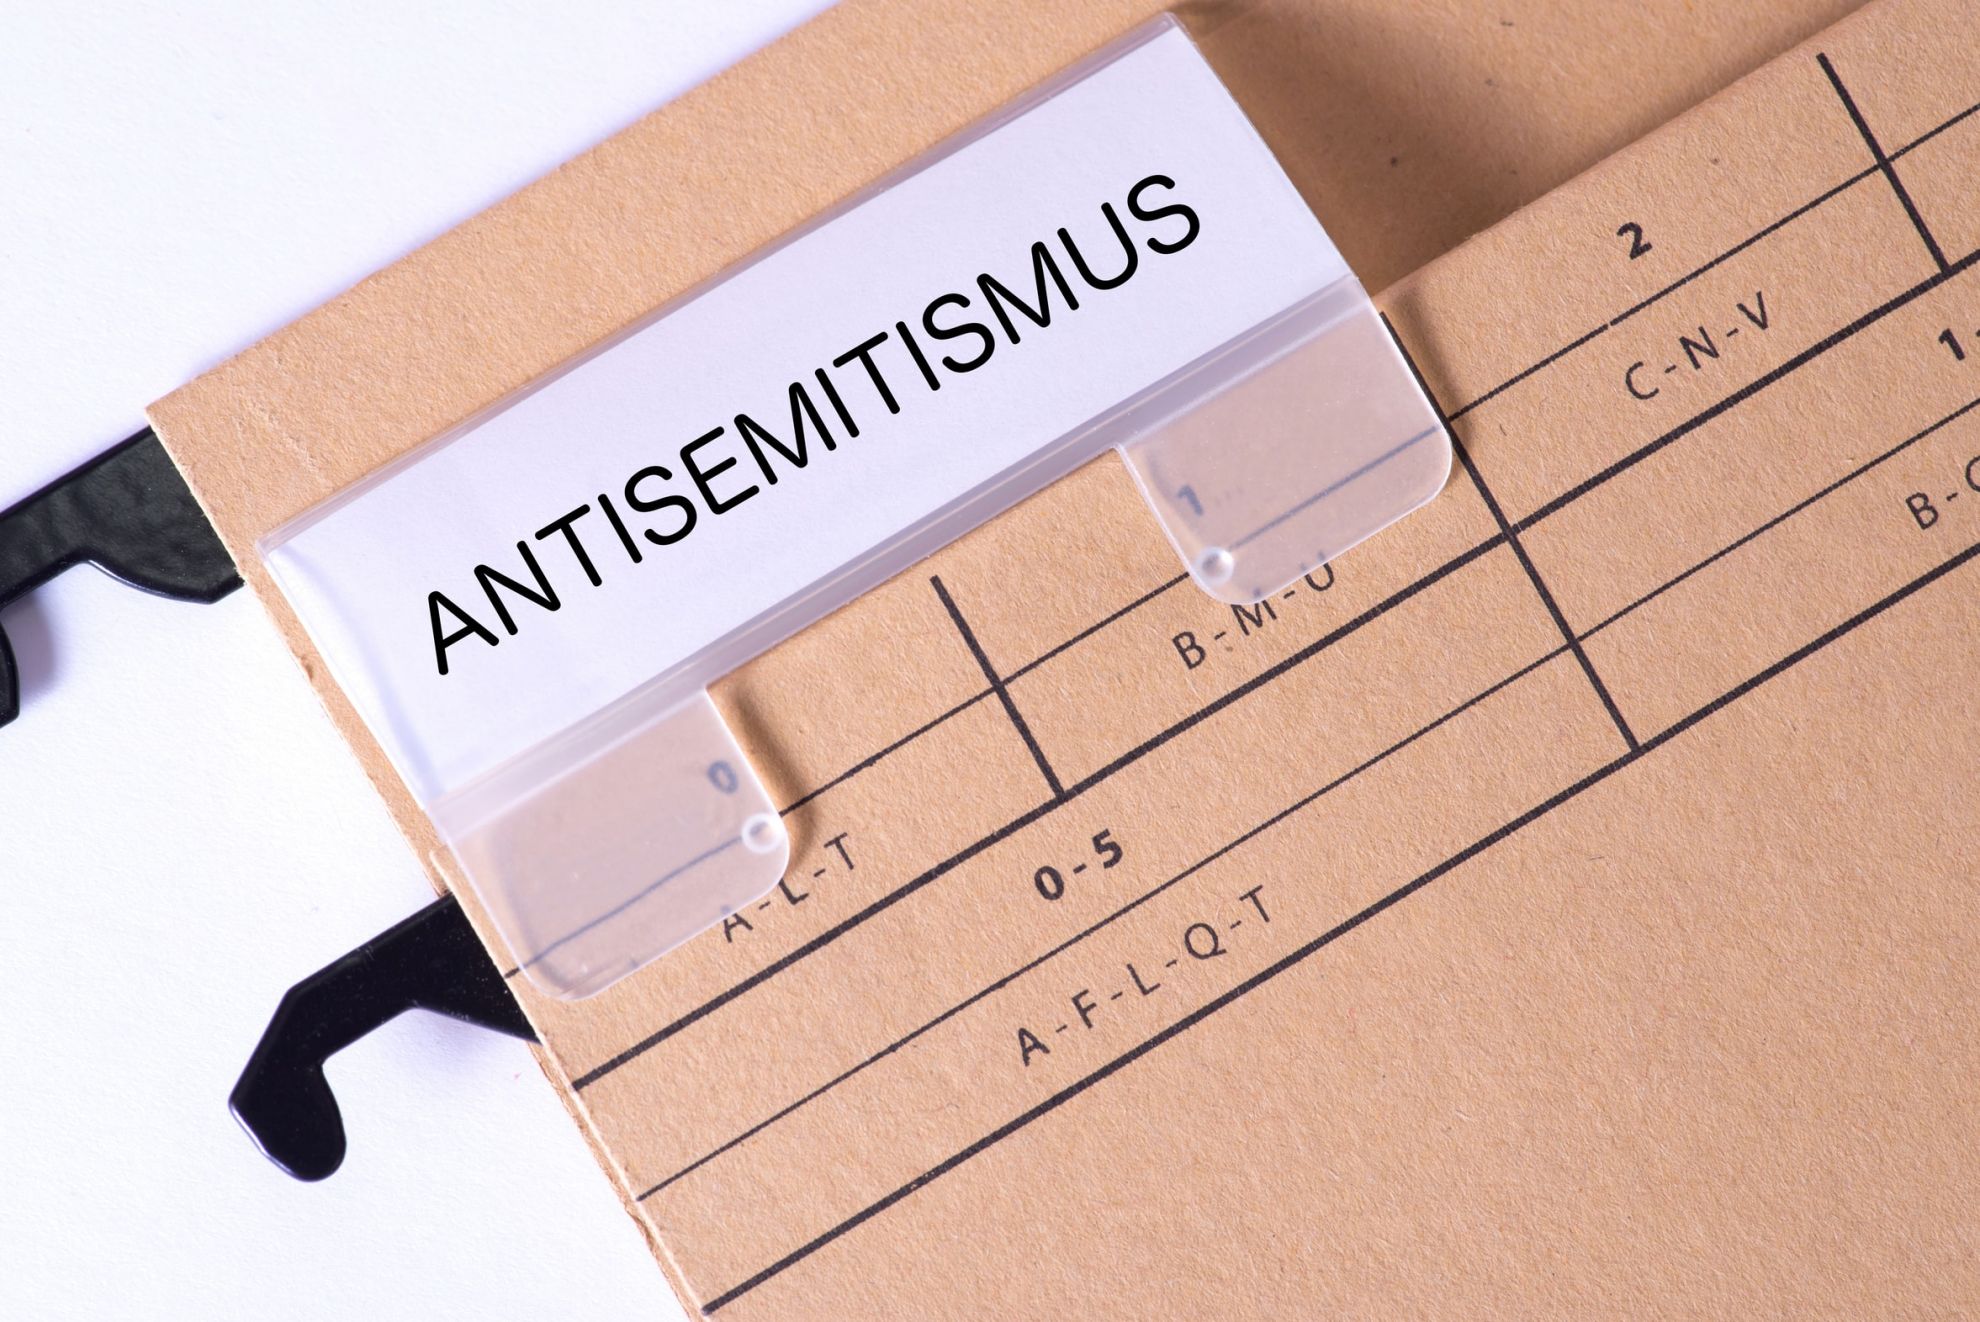 Die Akte Antisemitismus. (Foto: fotolia/stadtratte)